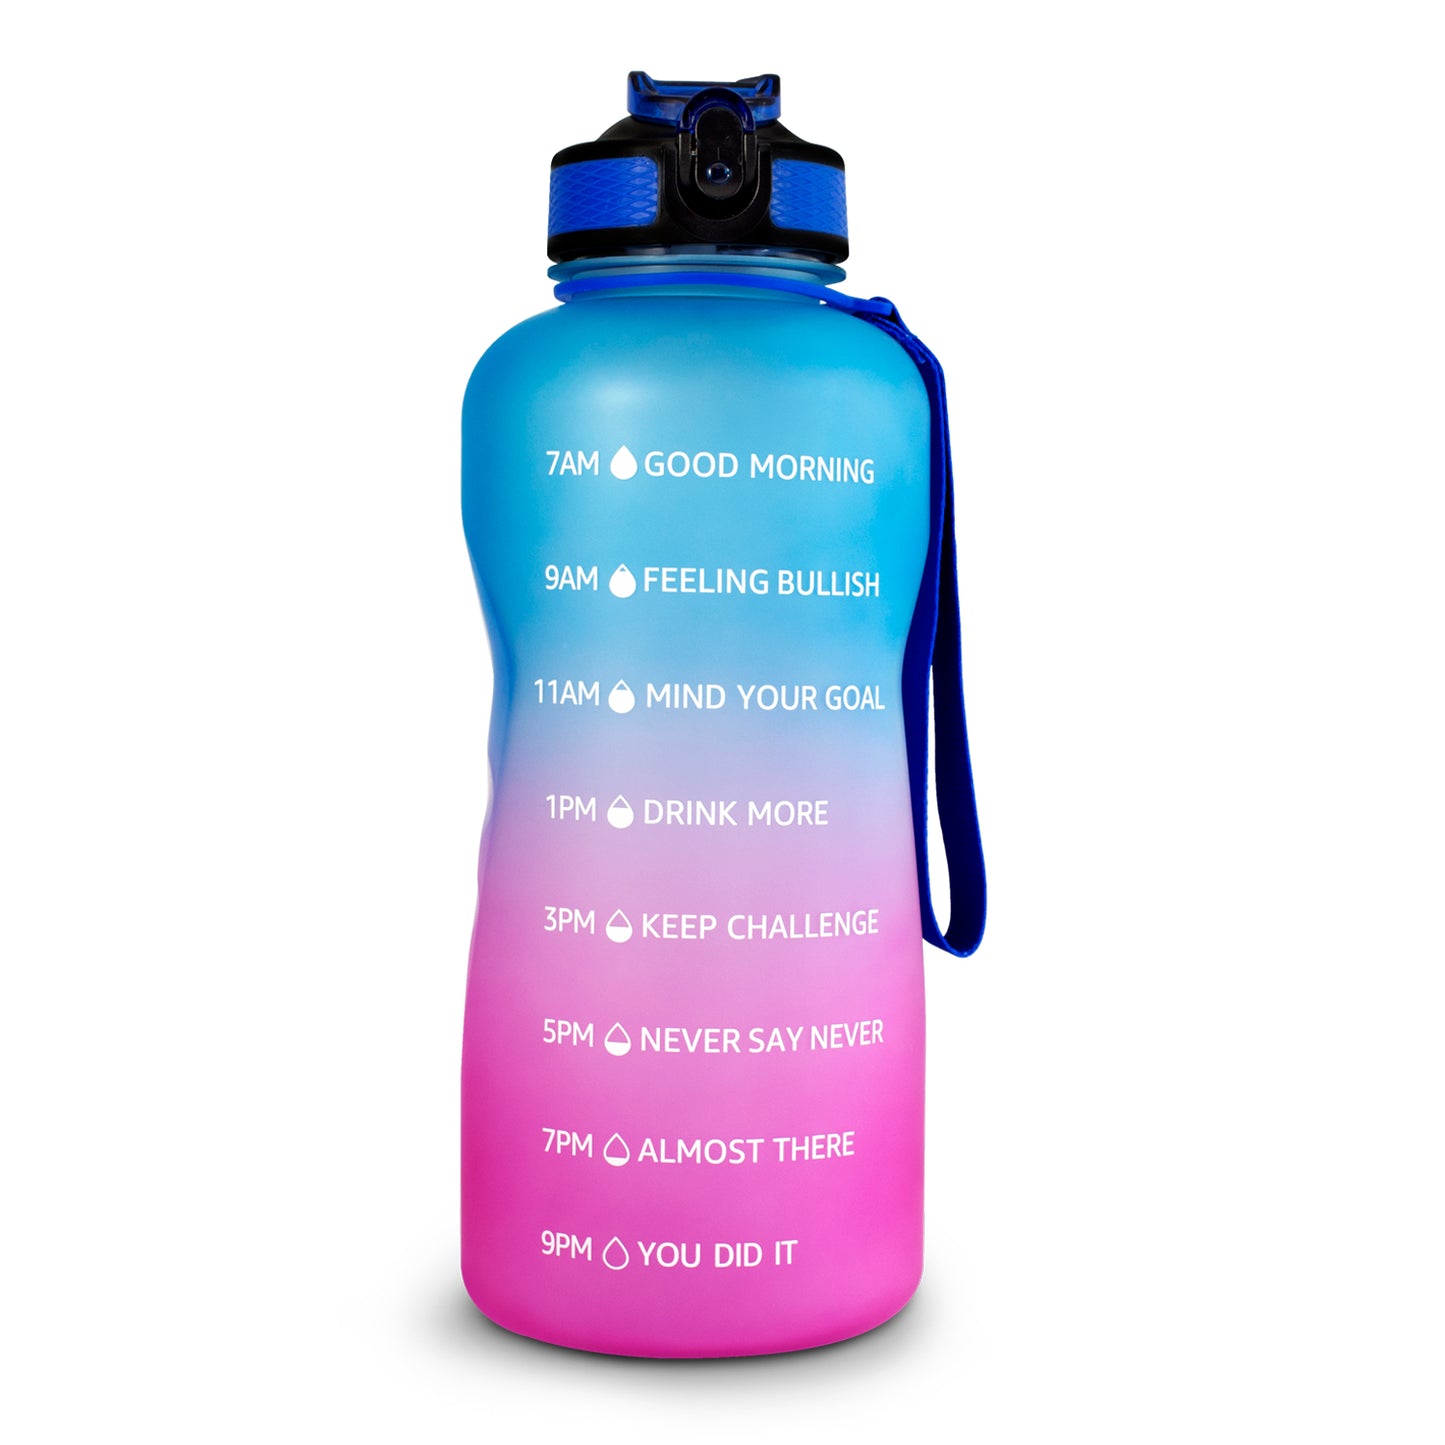 Botella Motivacional 2 litros azul/rosa